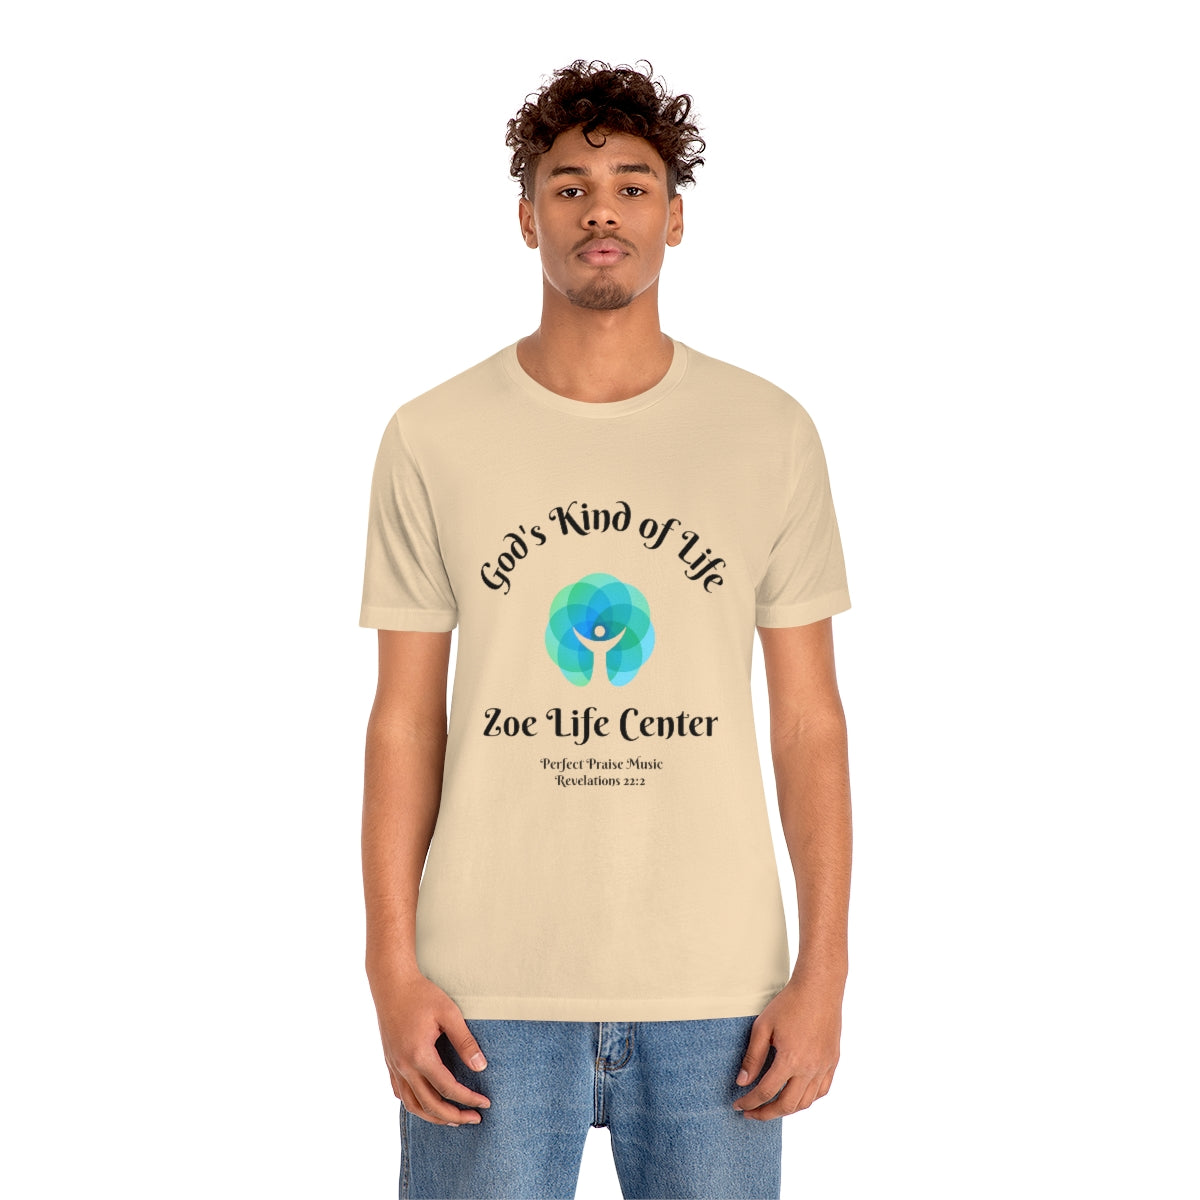 Zoe Life Center ~ God&#39;s Kind of Life